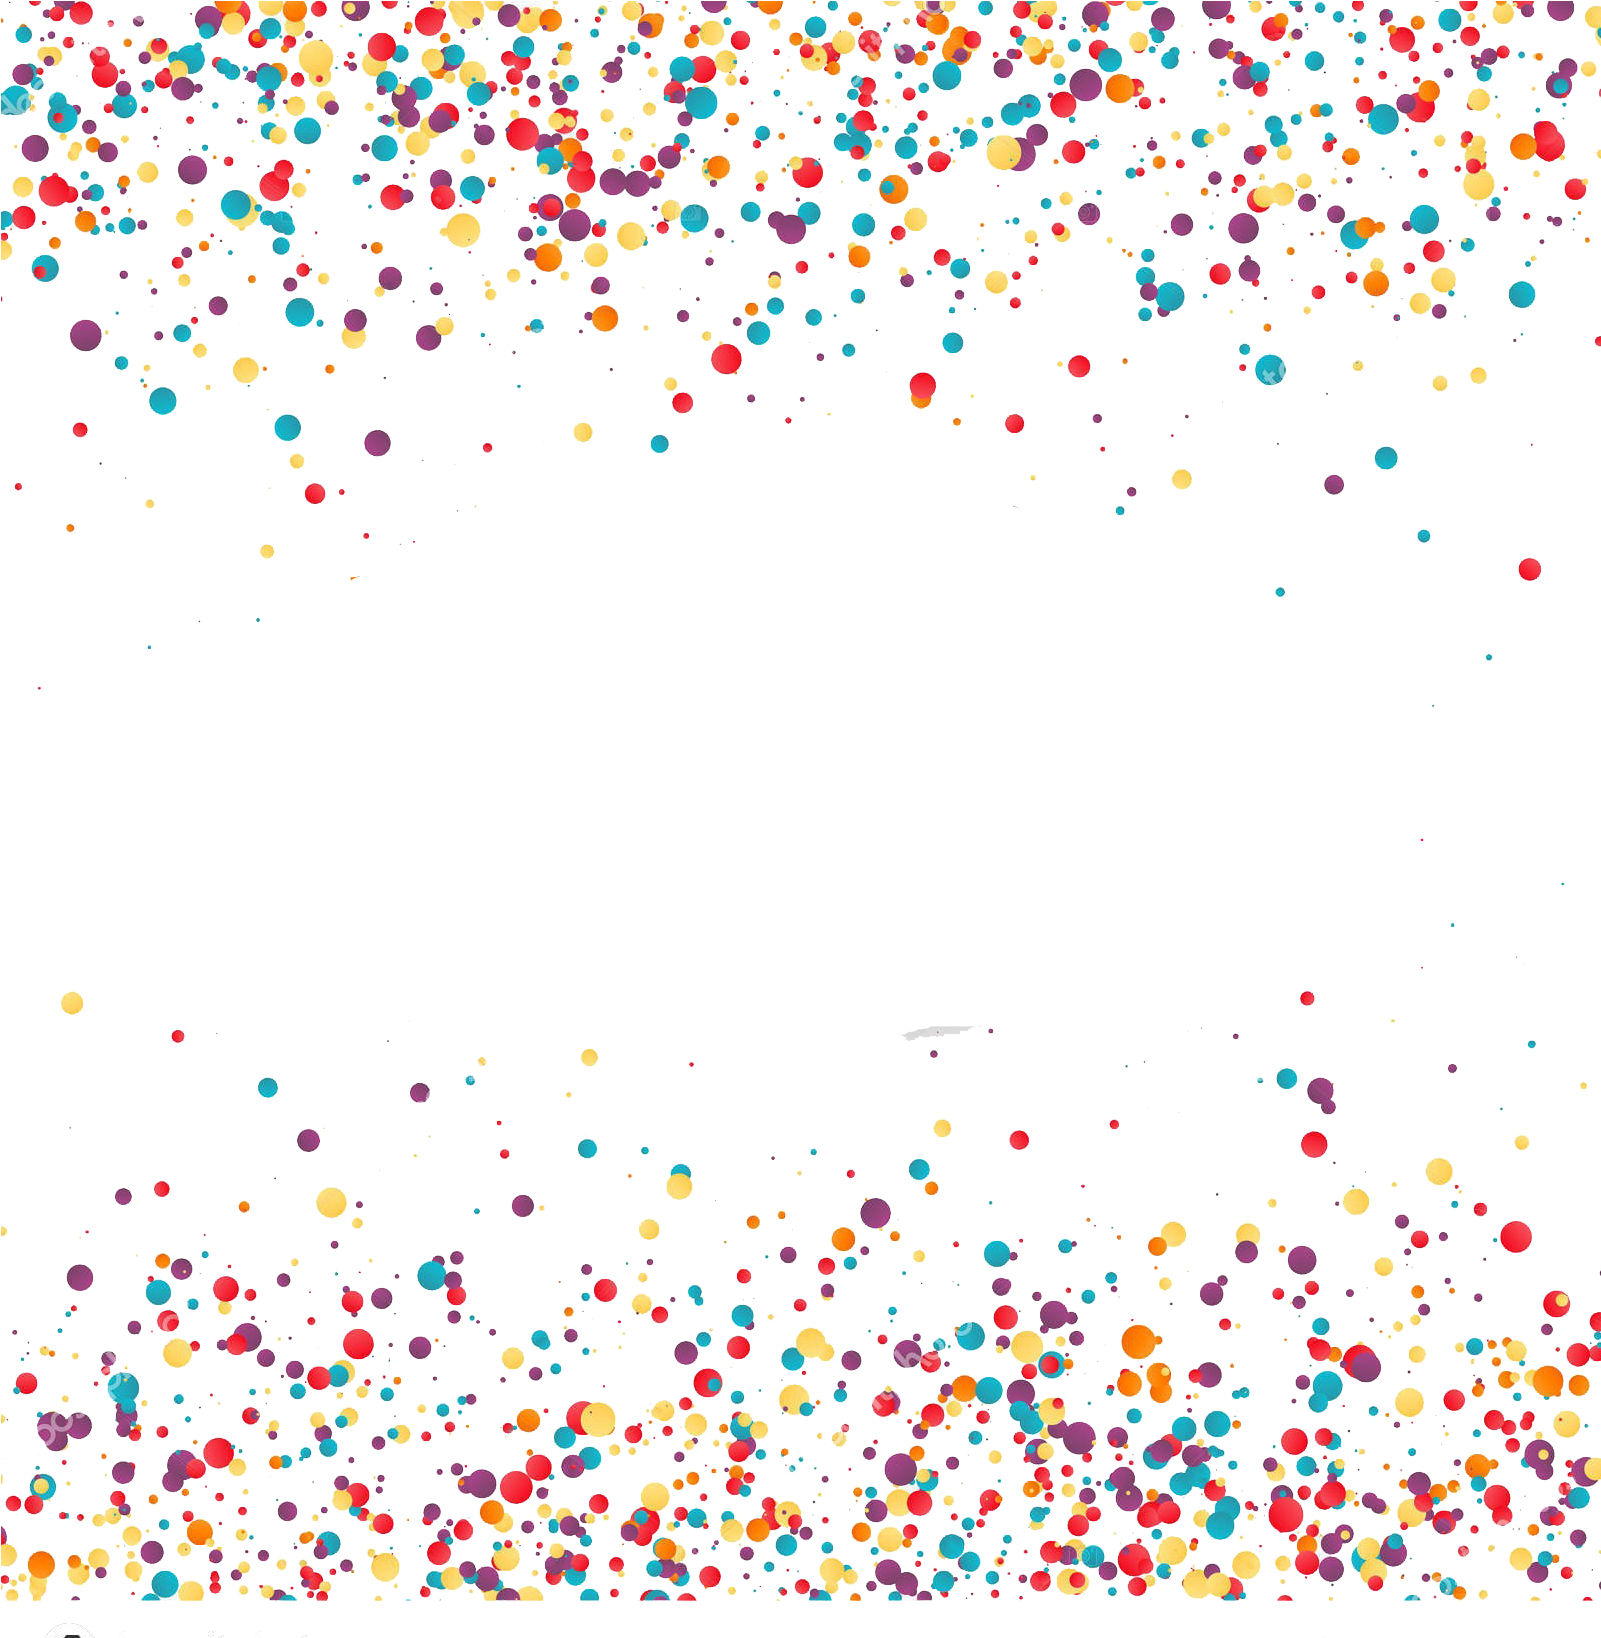 A Colorful Confetti On A Black Background